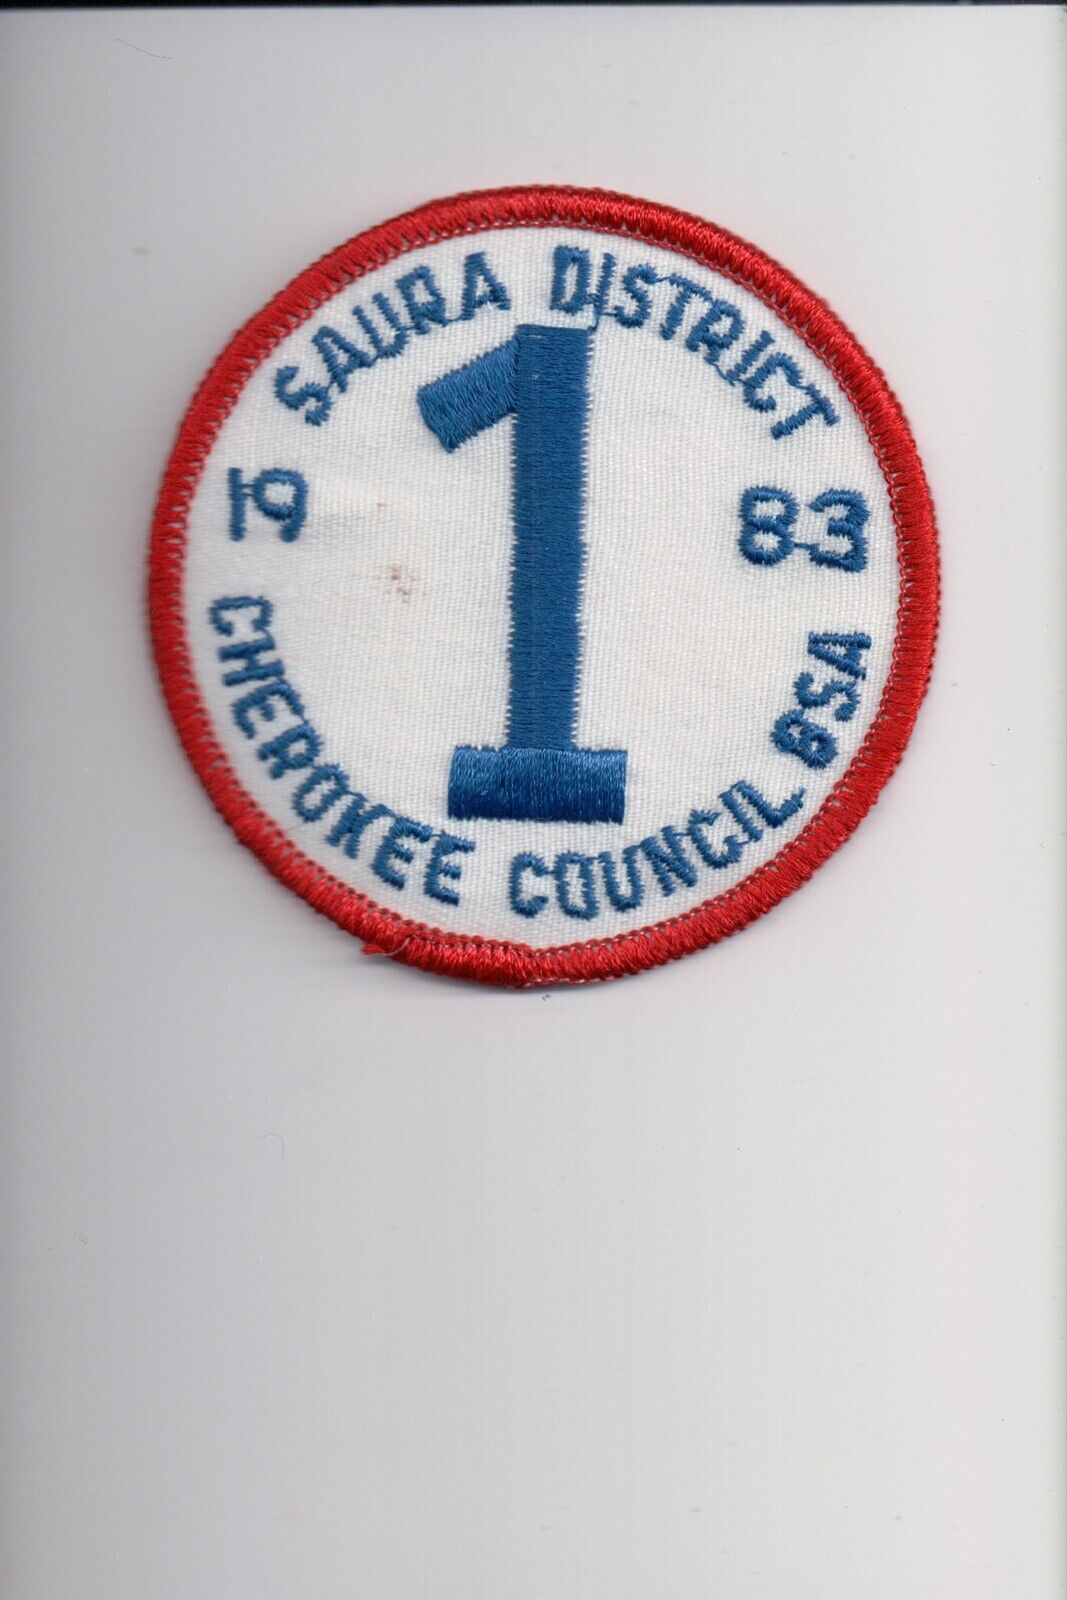 1983 Cherokee Council Saura District patch